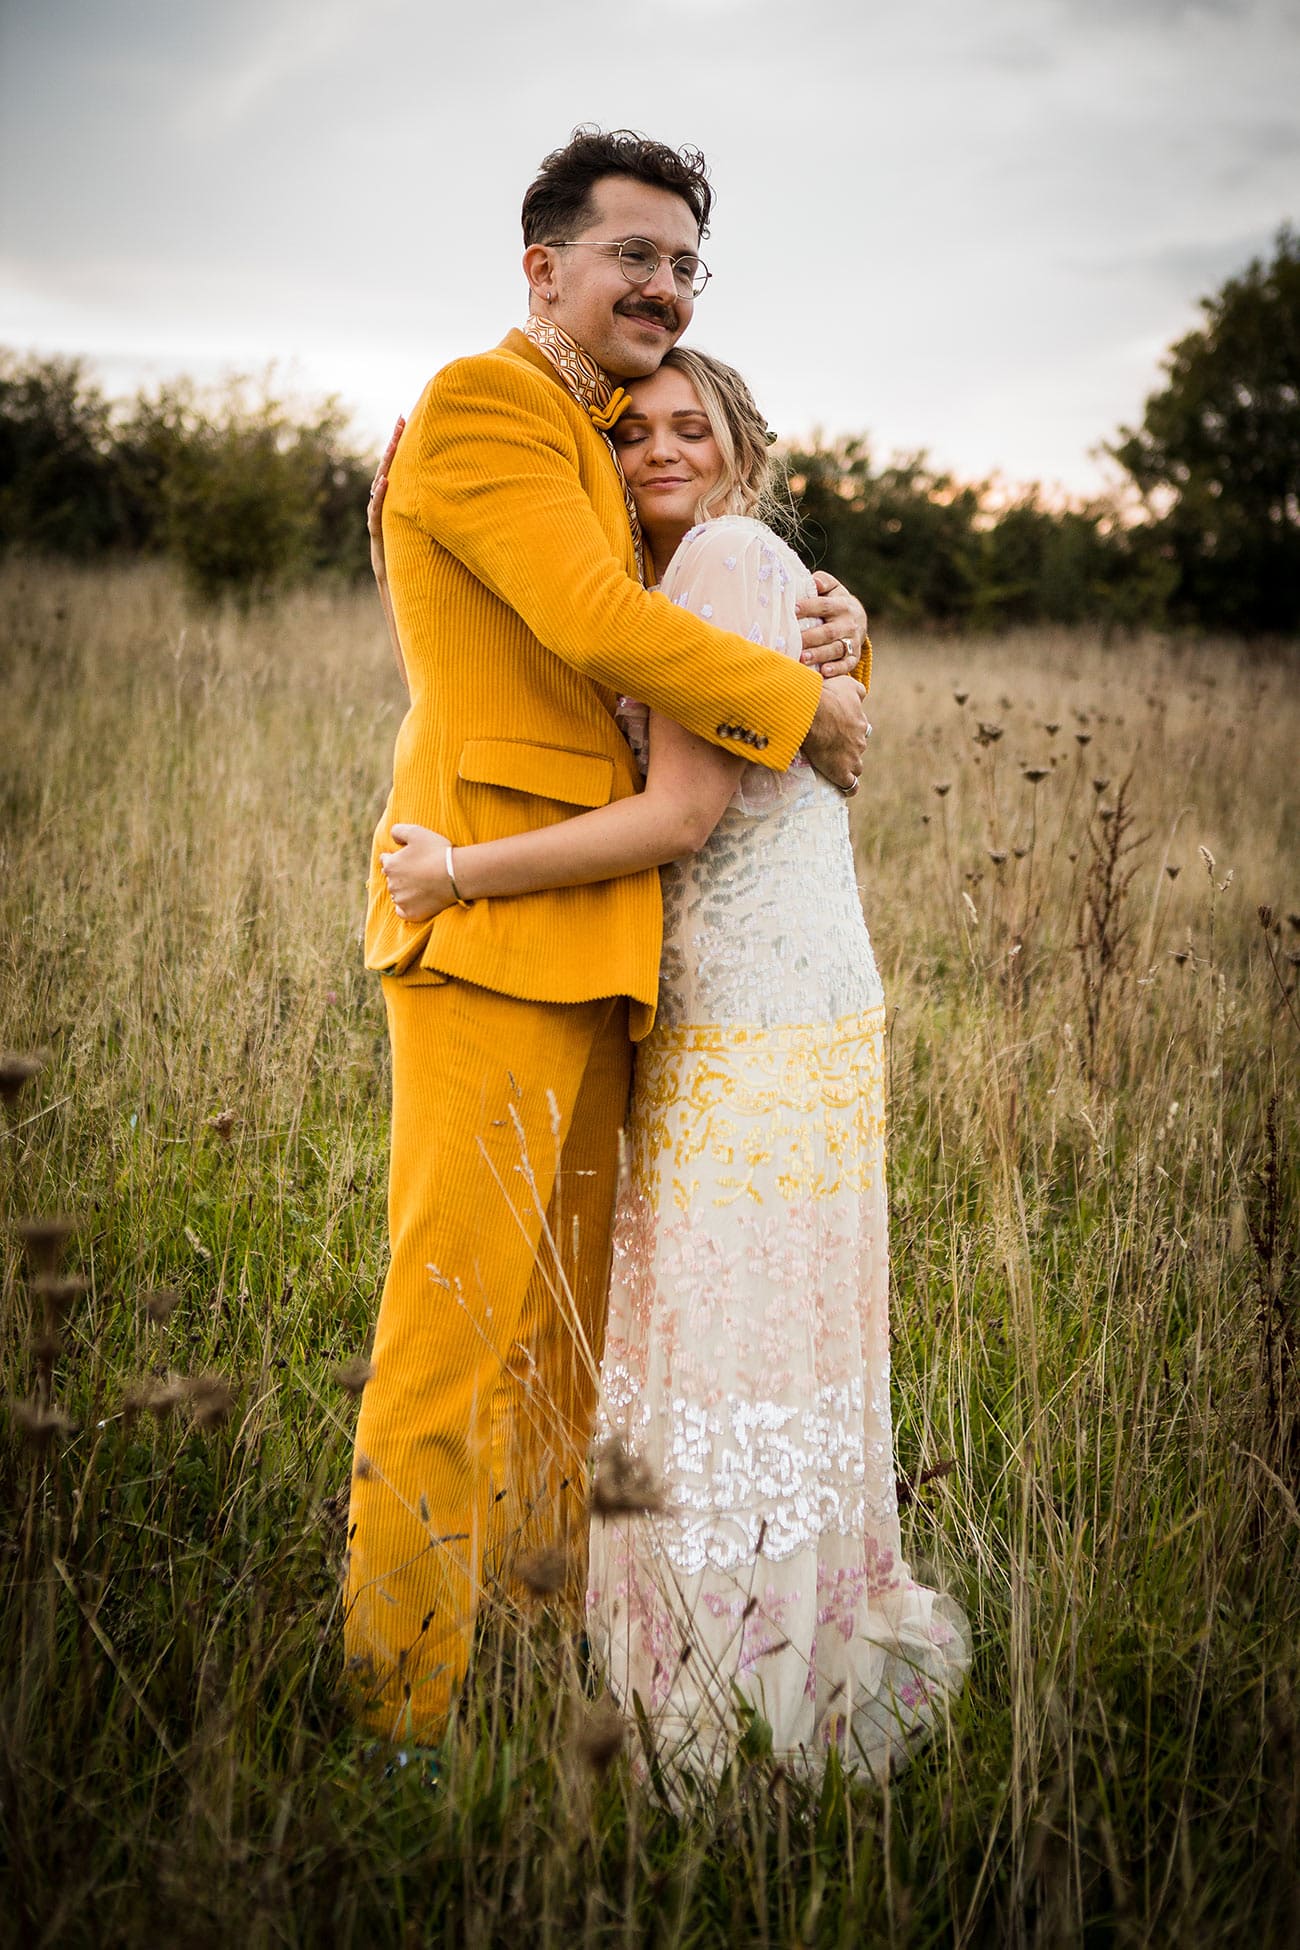 Wedding Photographer Devon Freeform Images